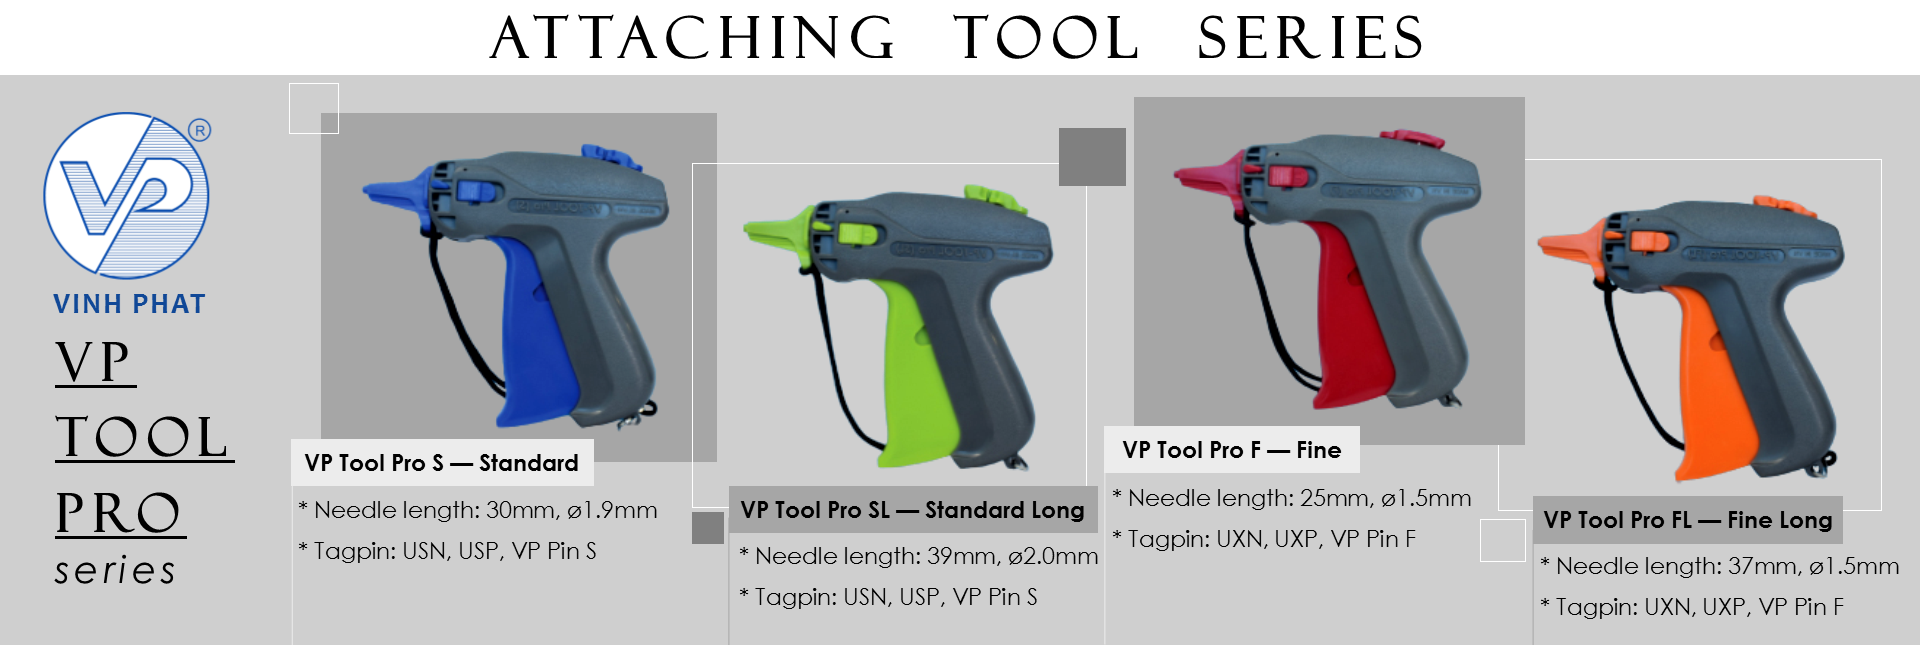 VP Tool Pro Series